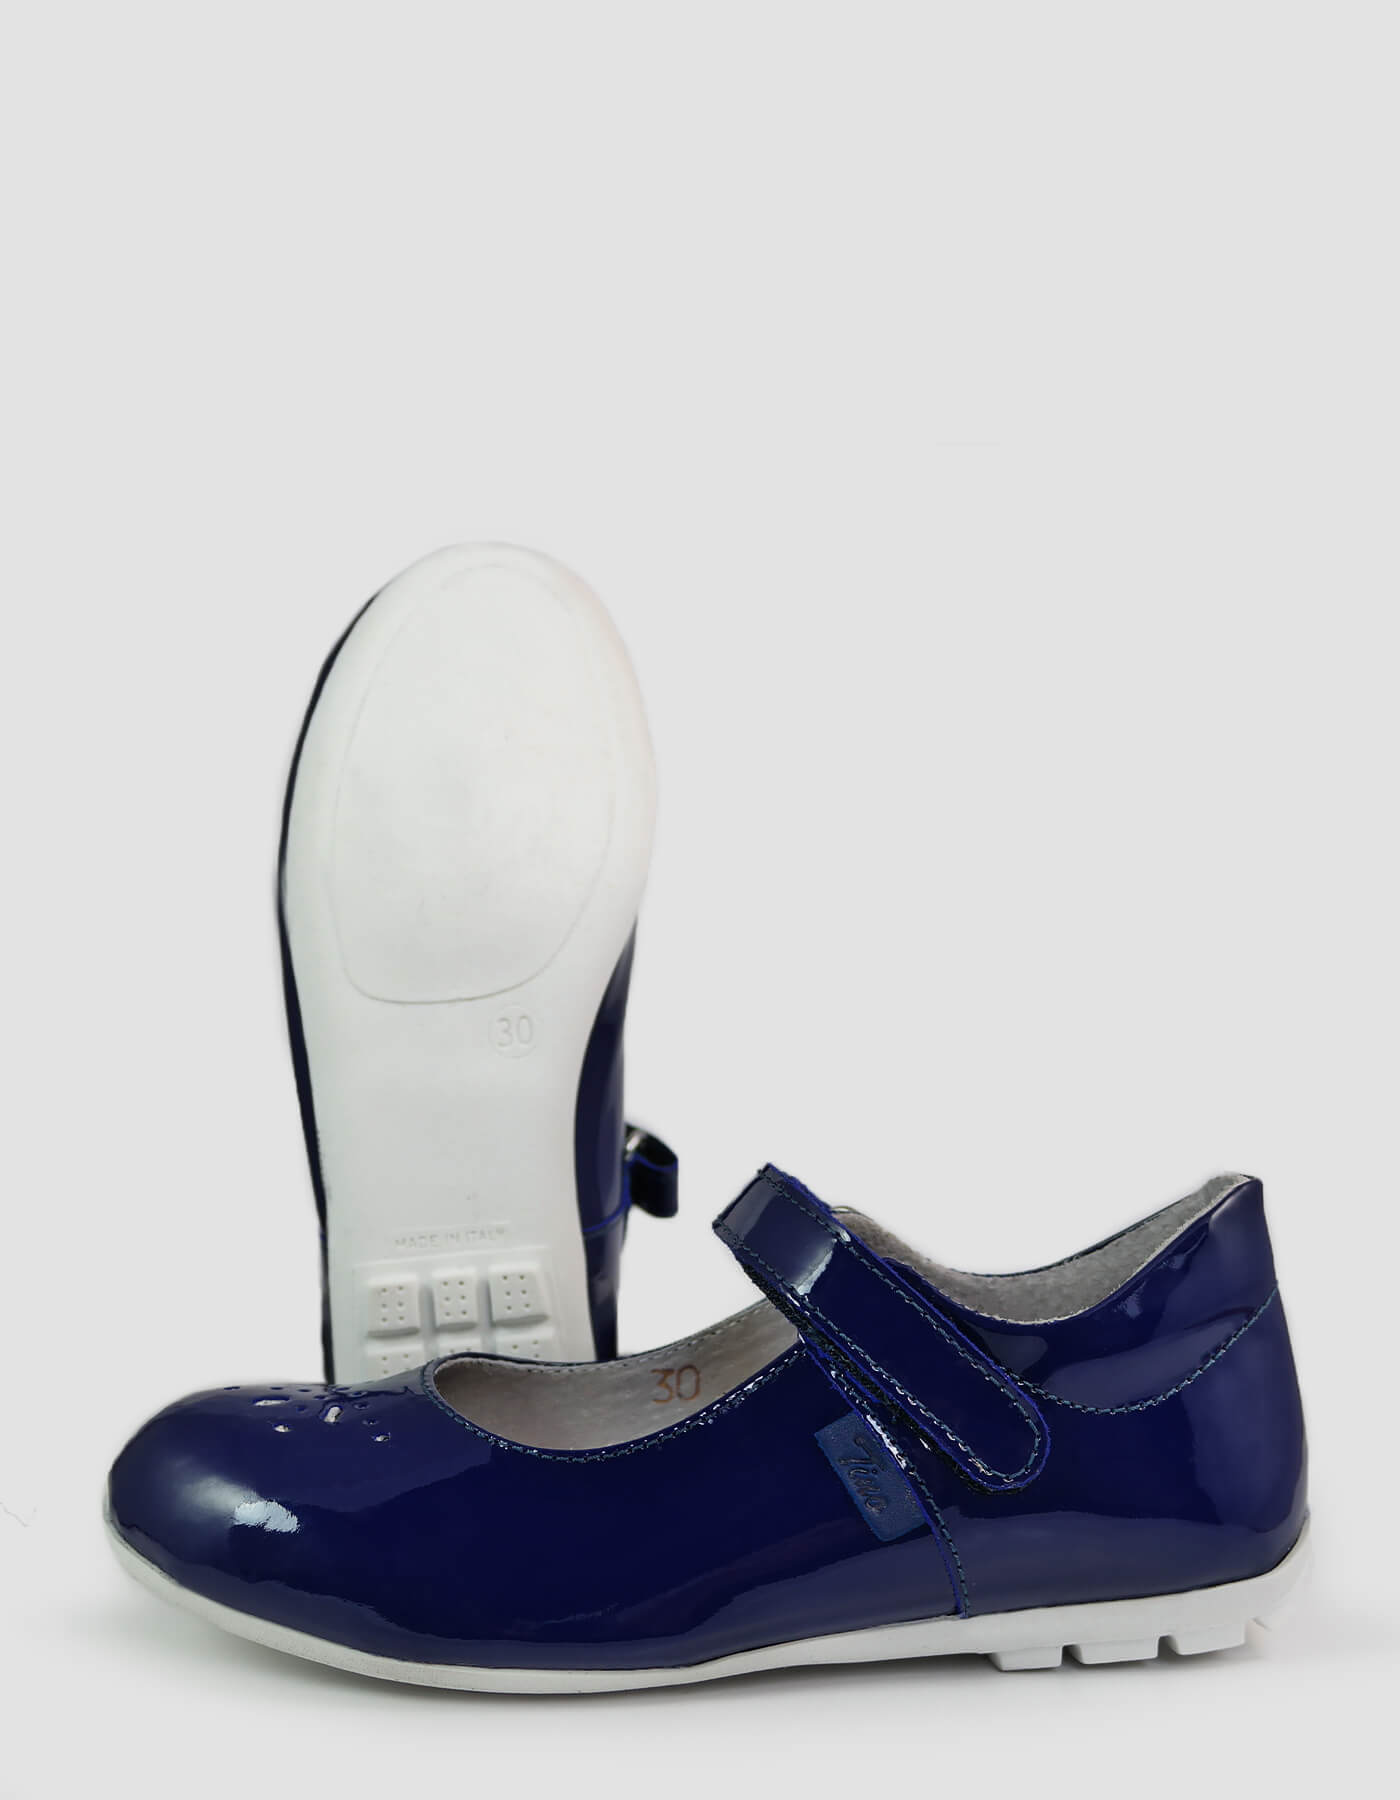 Pantofi fete din piele naturala bleumarin cu bareta TINO, 30-35